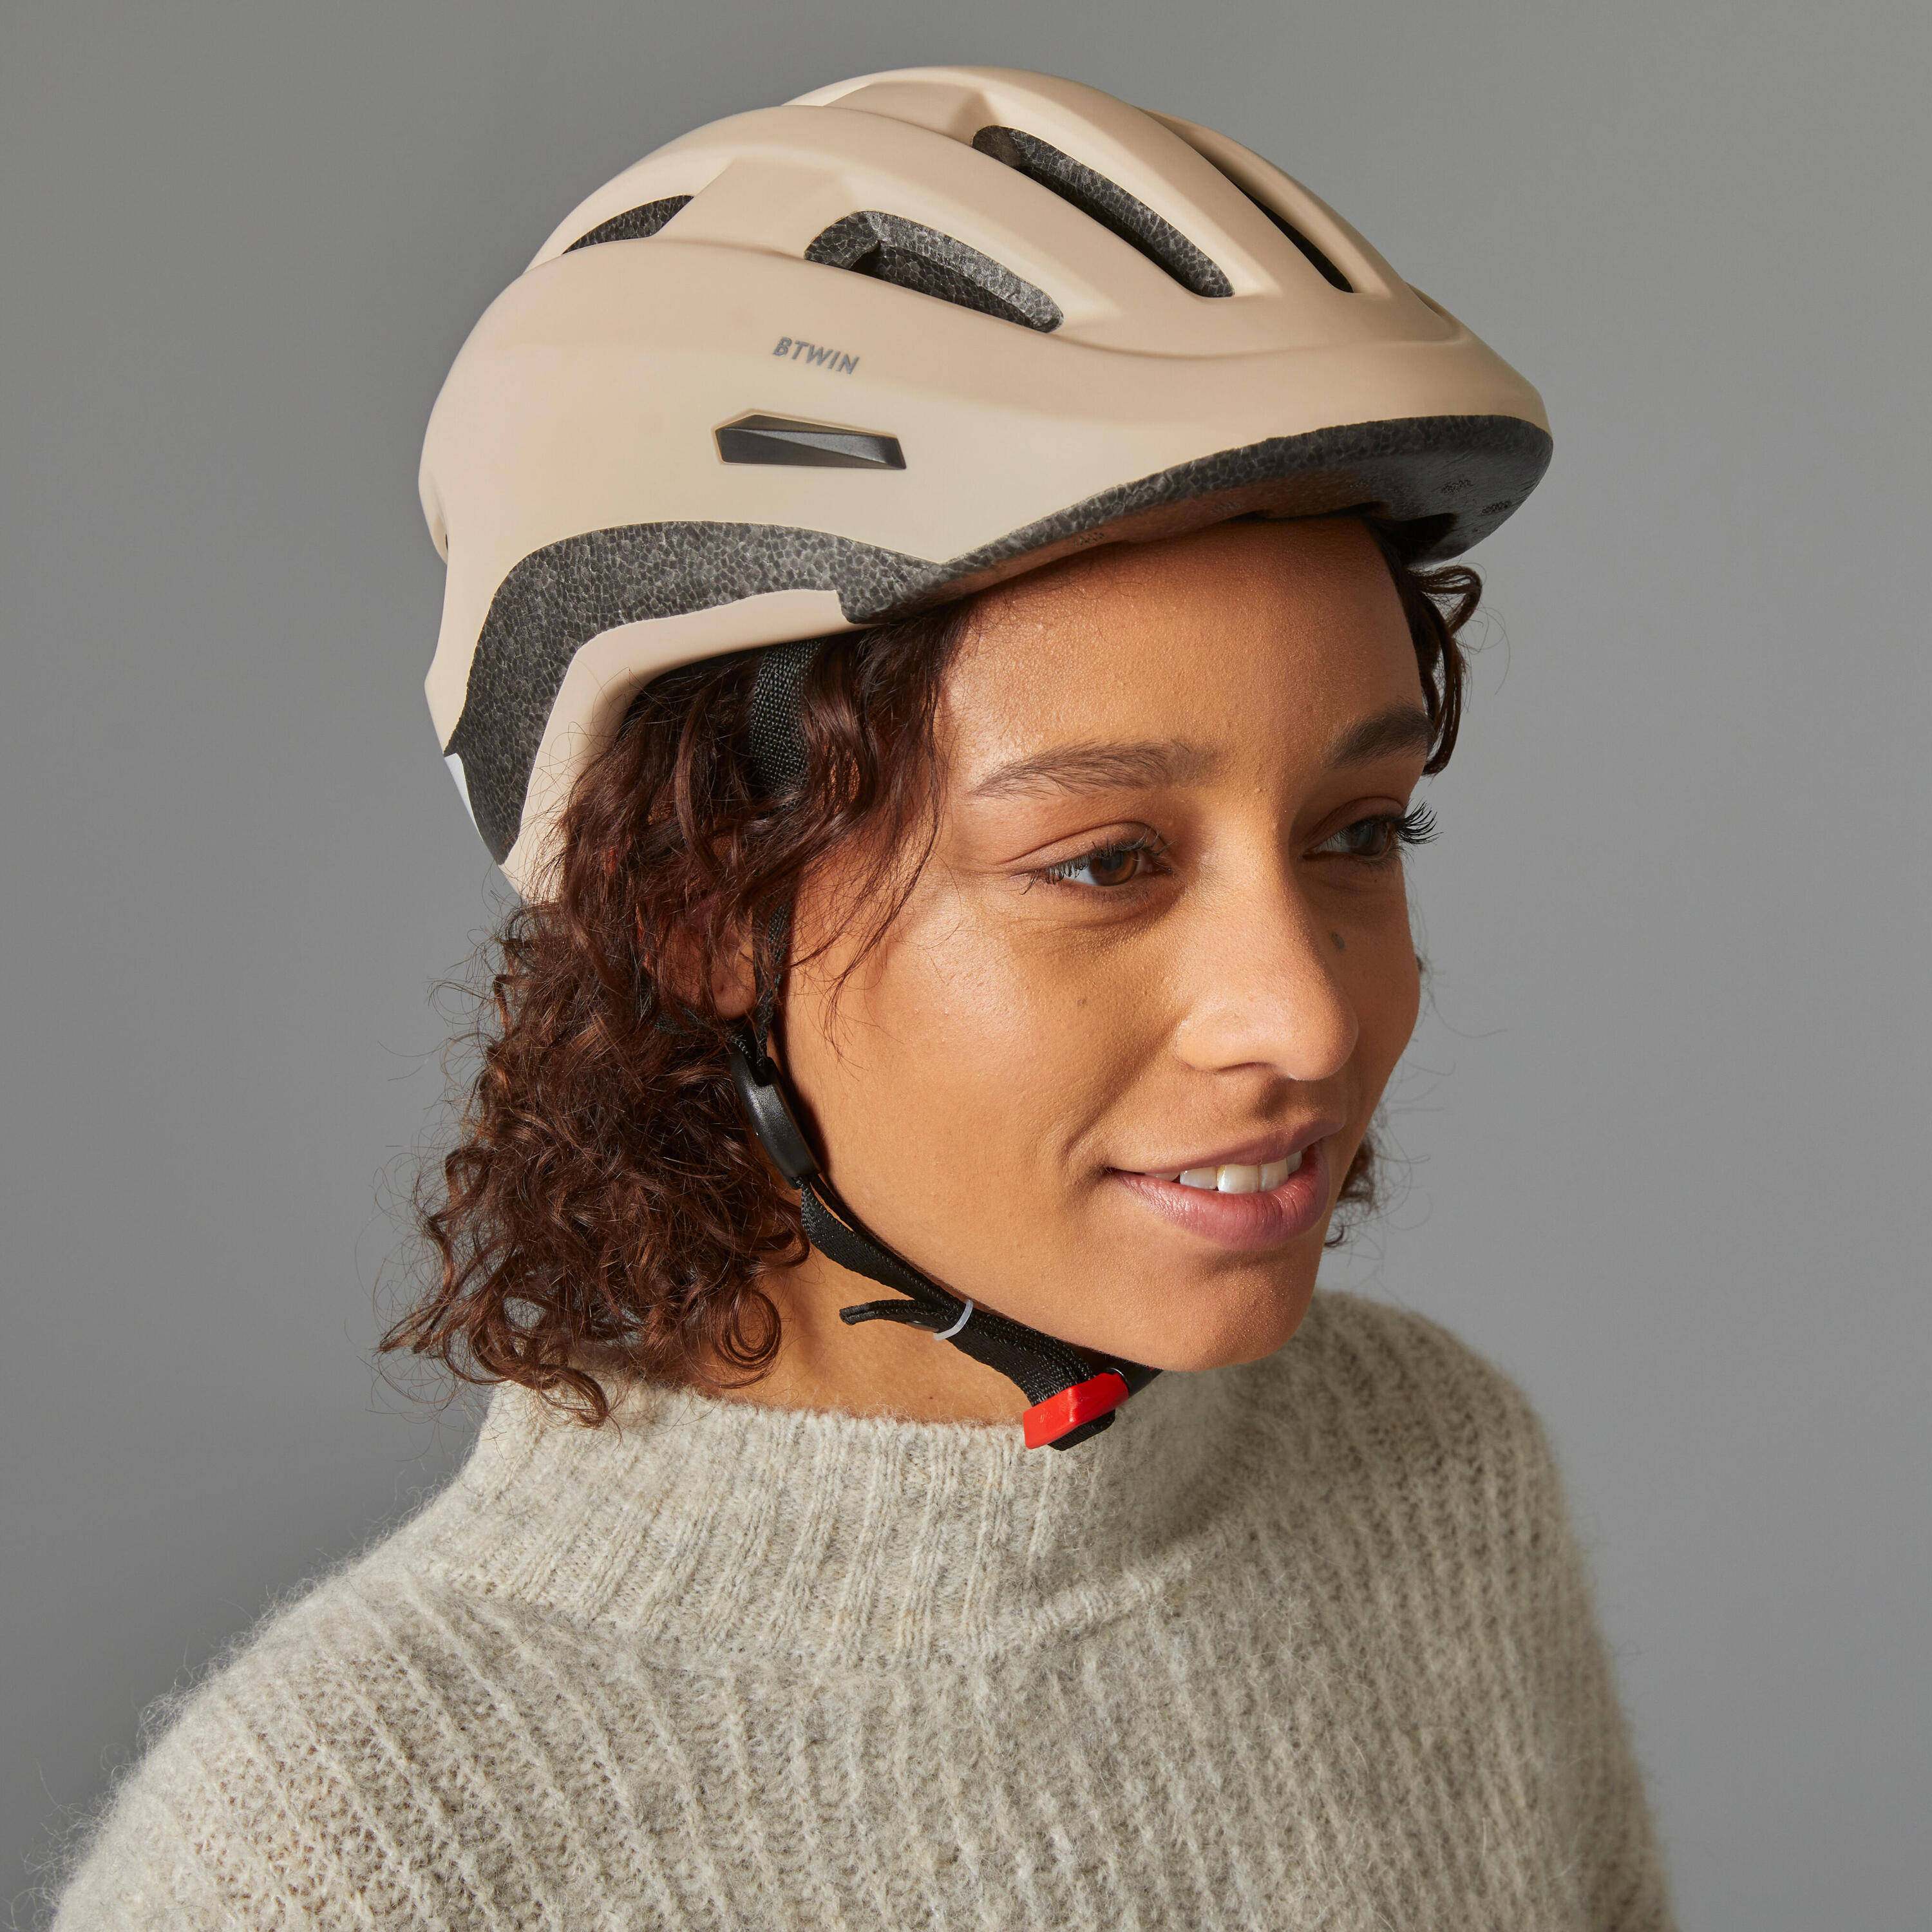 City Cycling Helmet 500 9/10